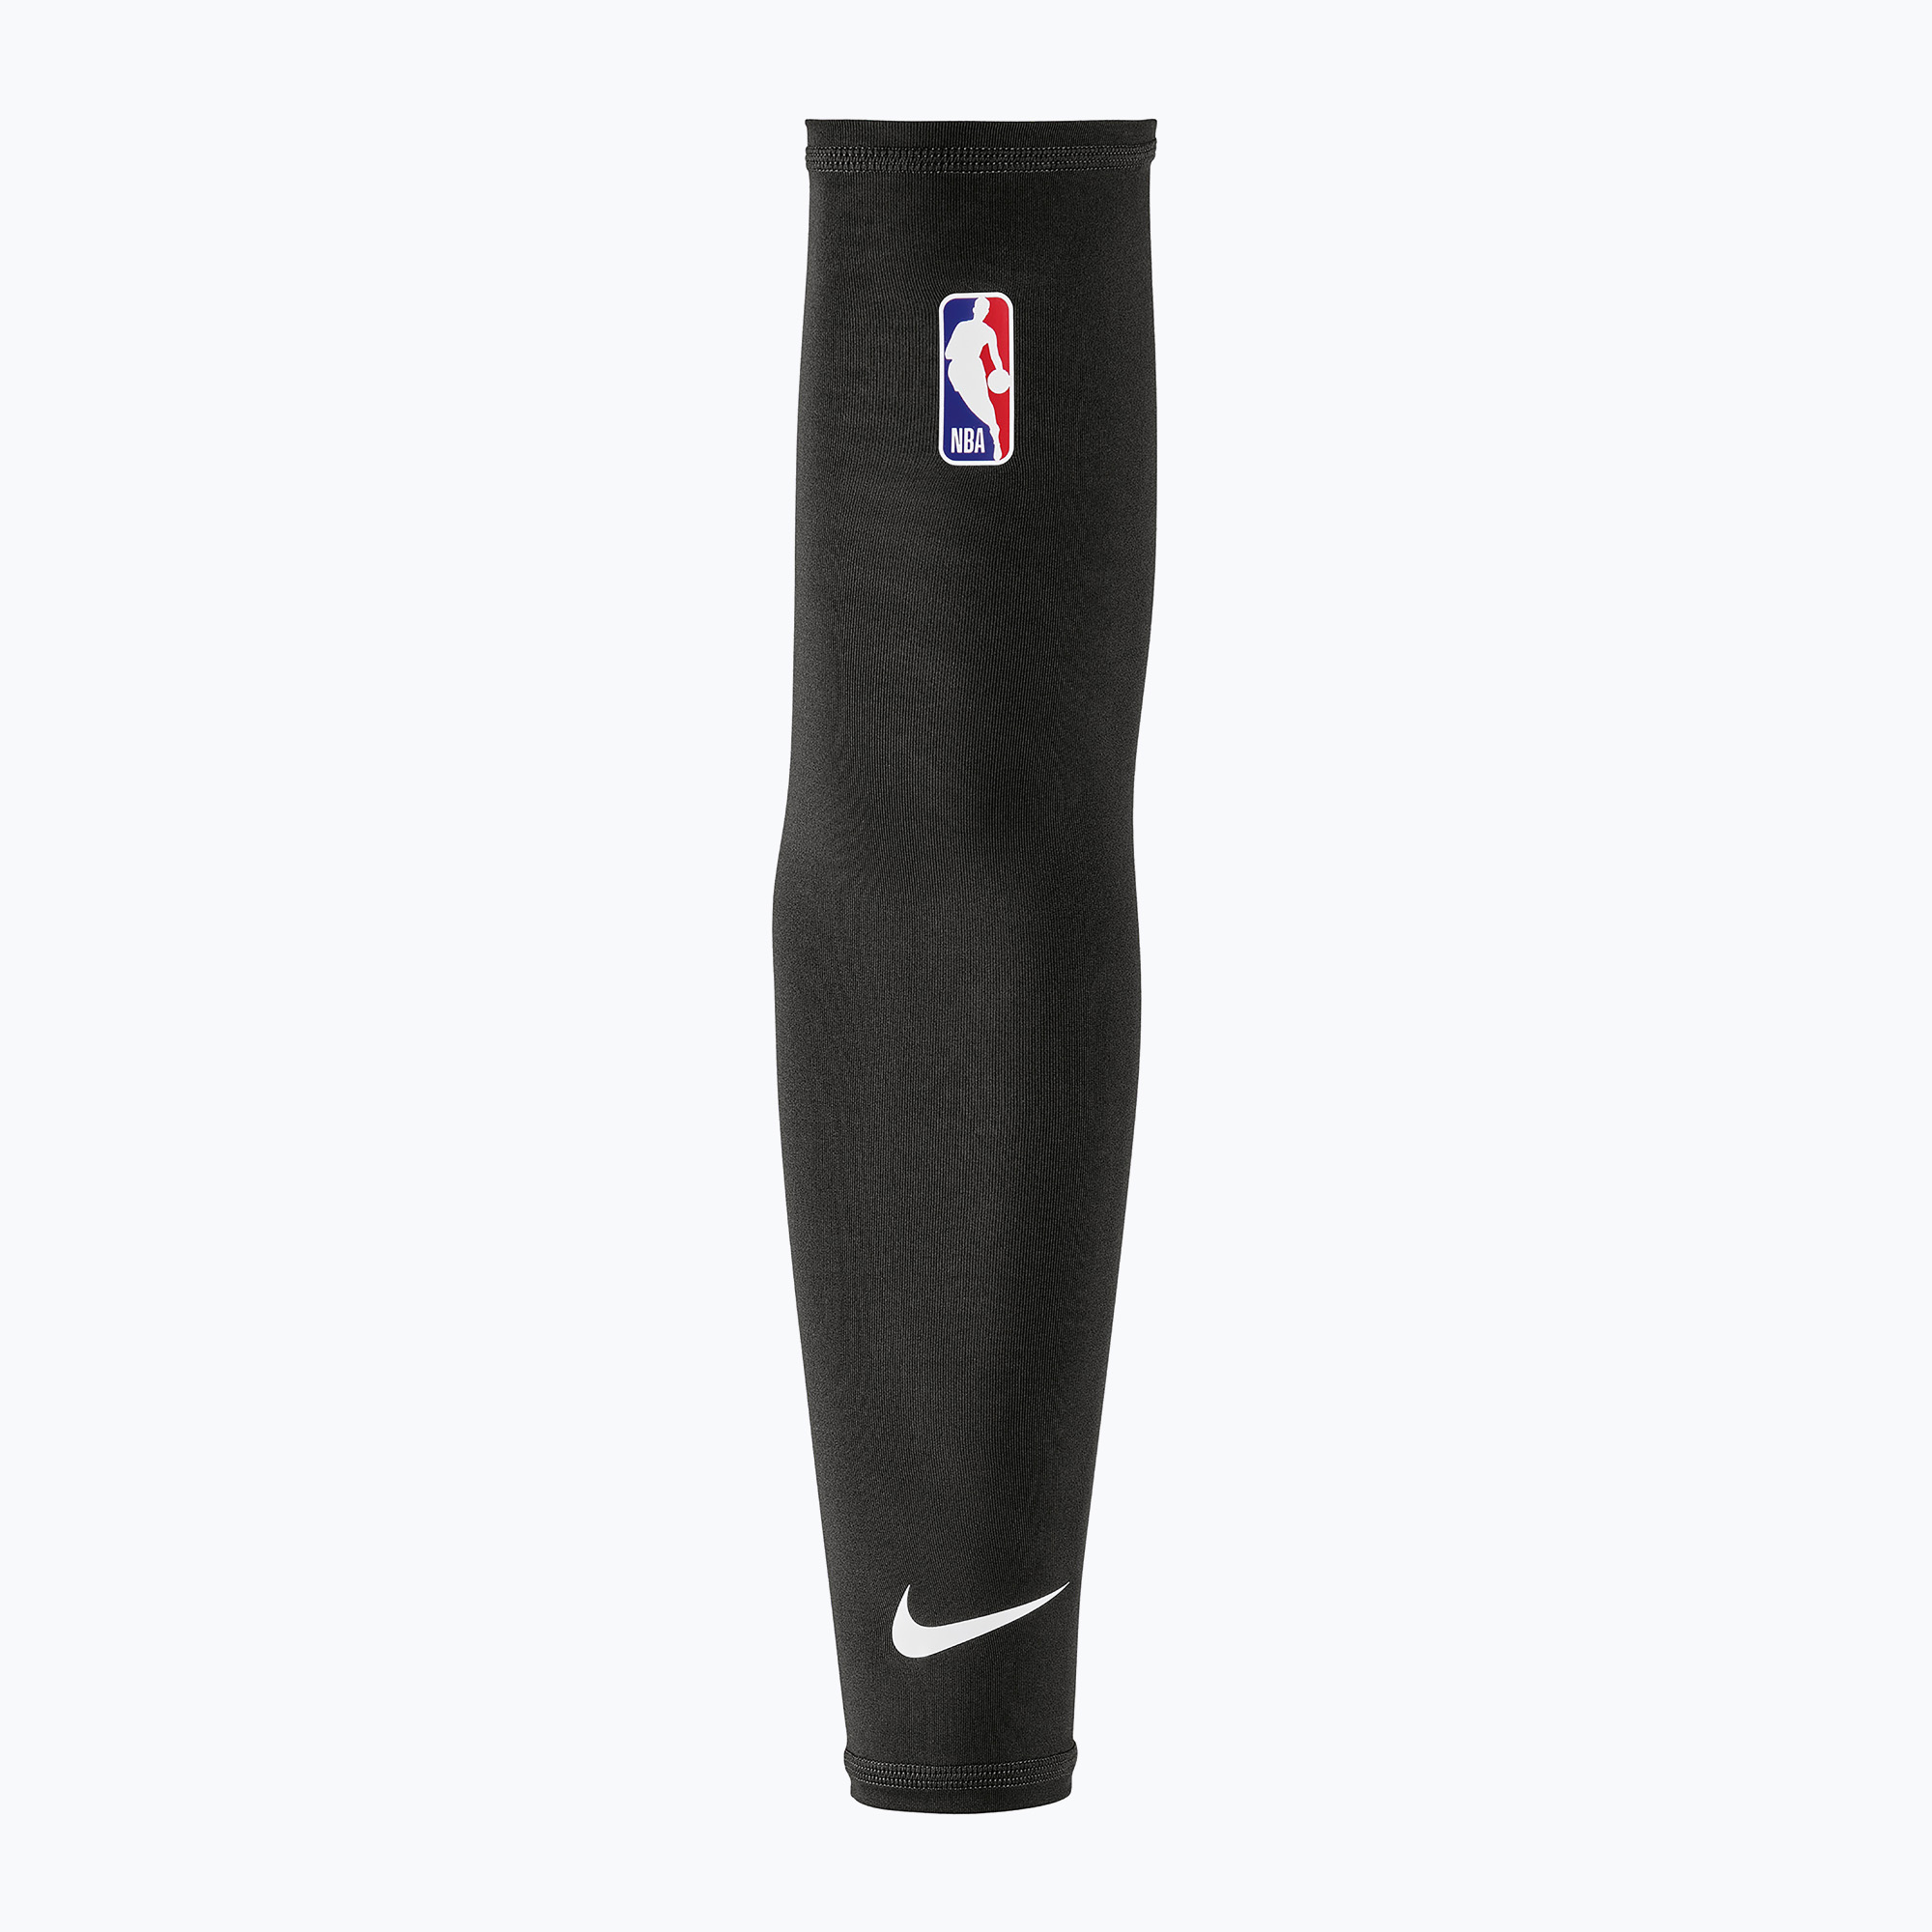 Nike Shooter Basketball Sleeve 2.0 NBA negru N1002041-010